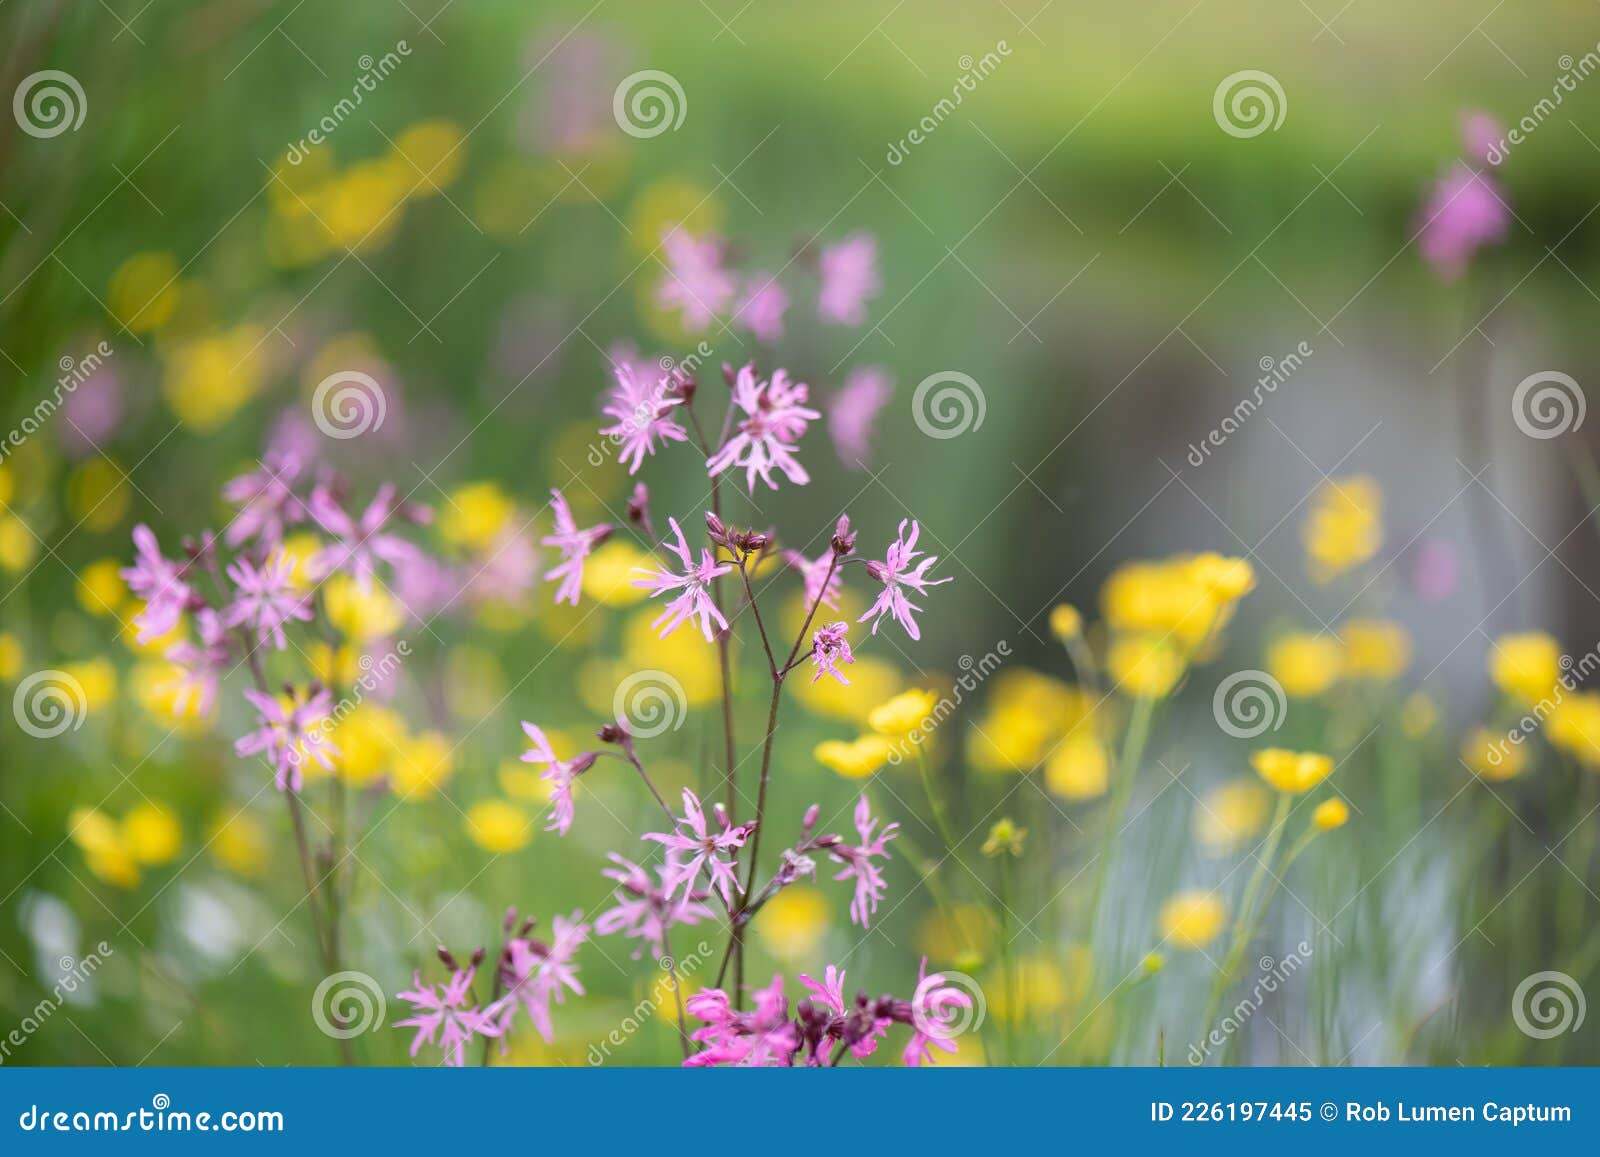 ragged-robin, silene flos-cuculi, flowering in a meadow